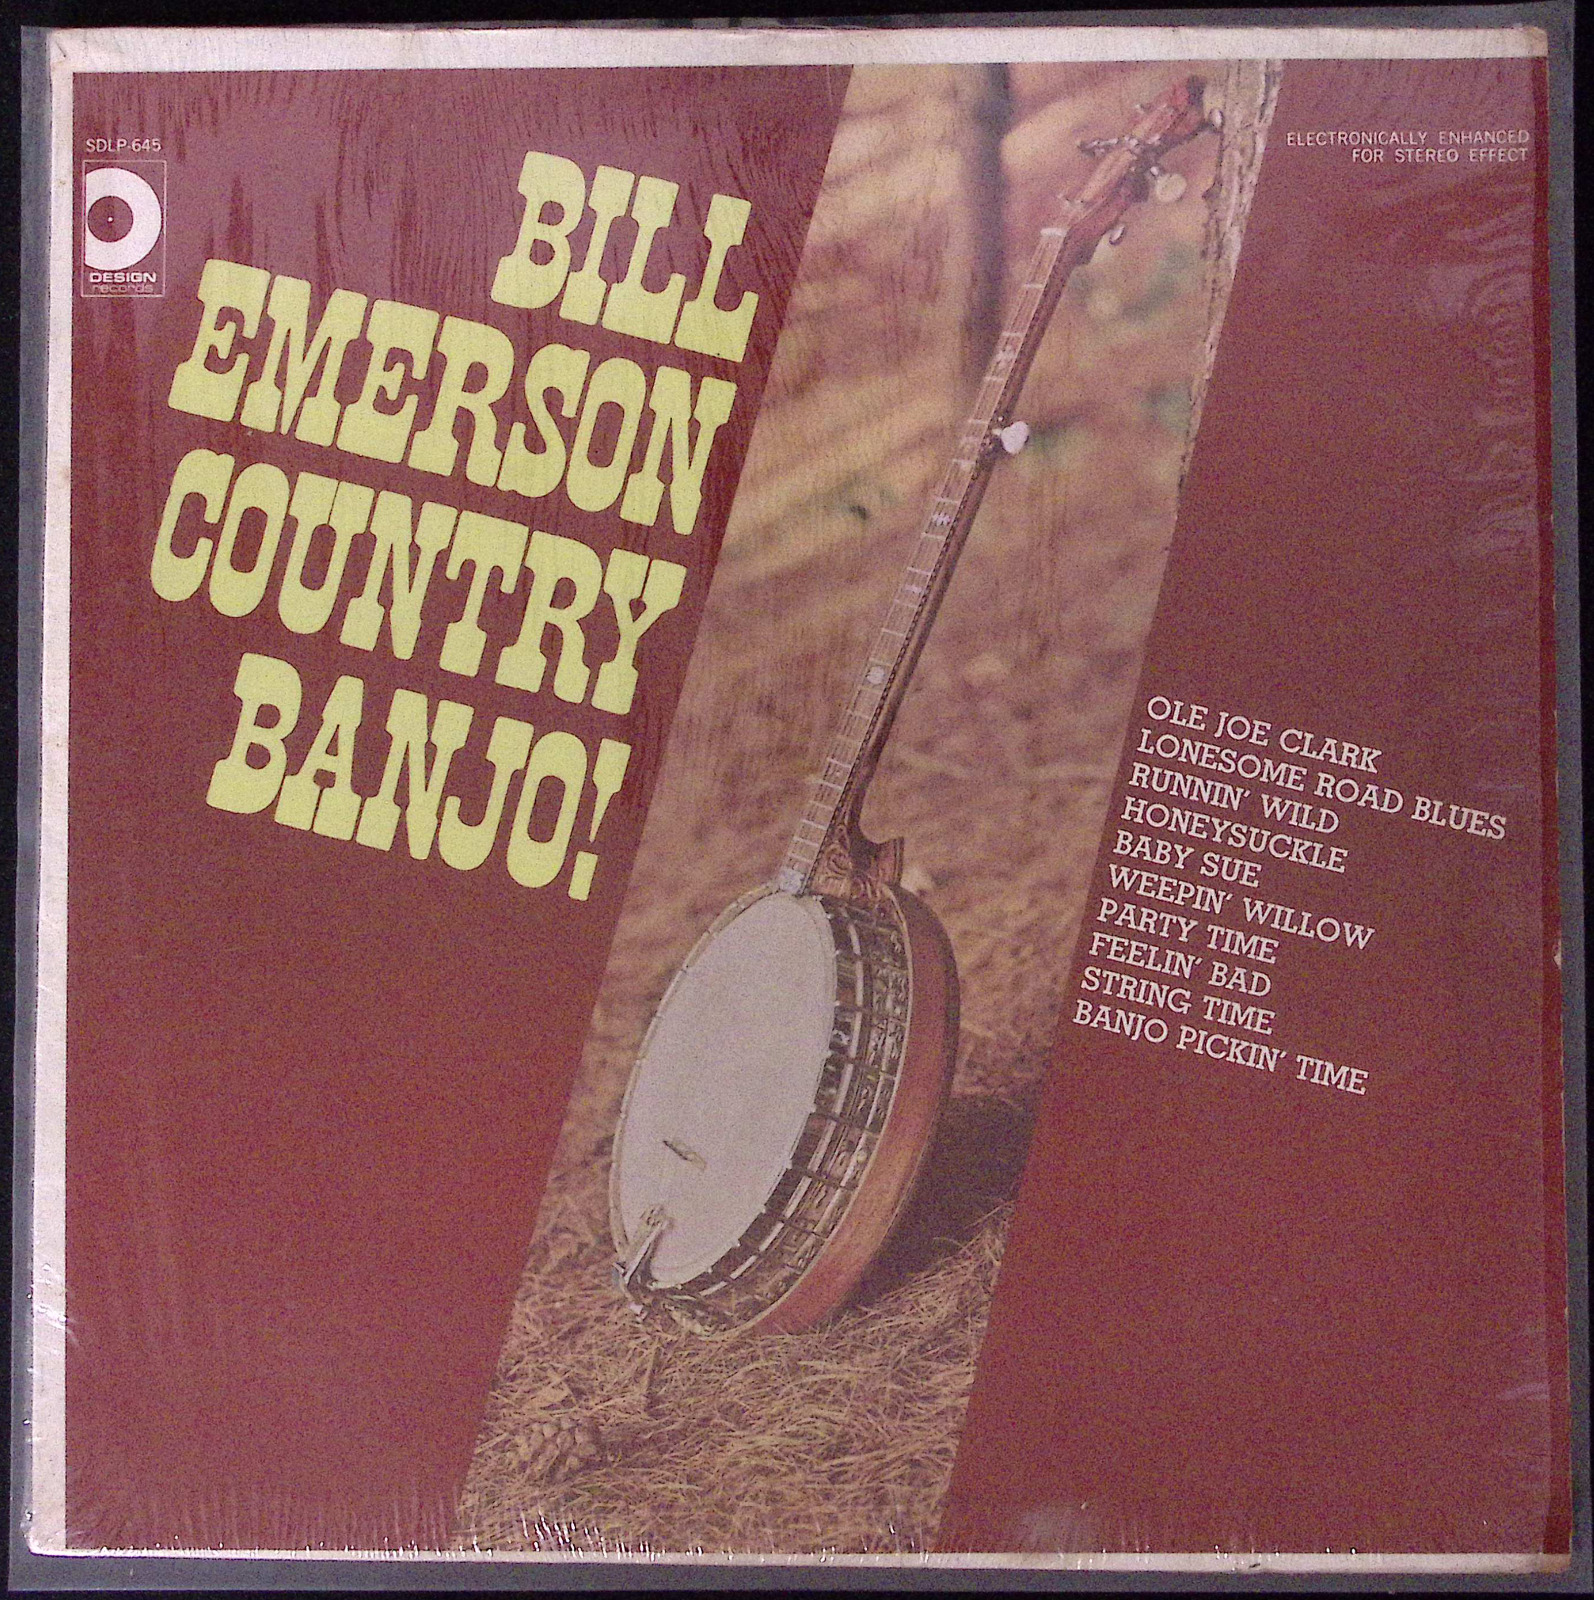 BILL EMERSON COUNTRY BANJO DESIGN RECORDS SDLP-645 EXC VINYL LP 158-38W